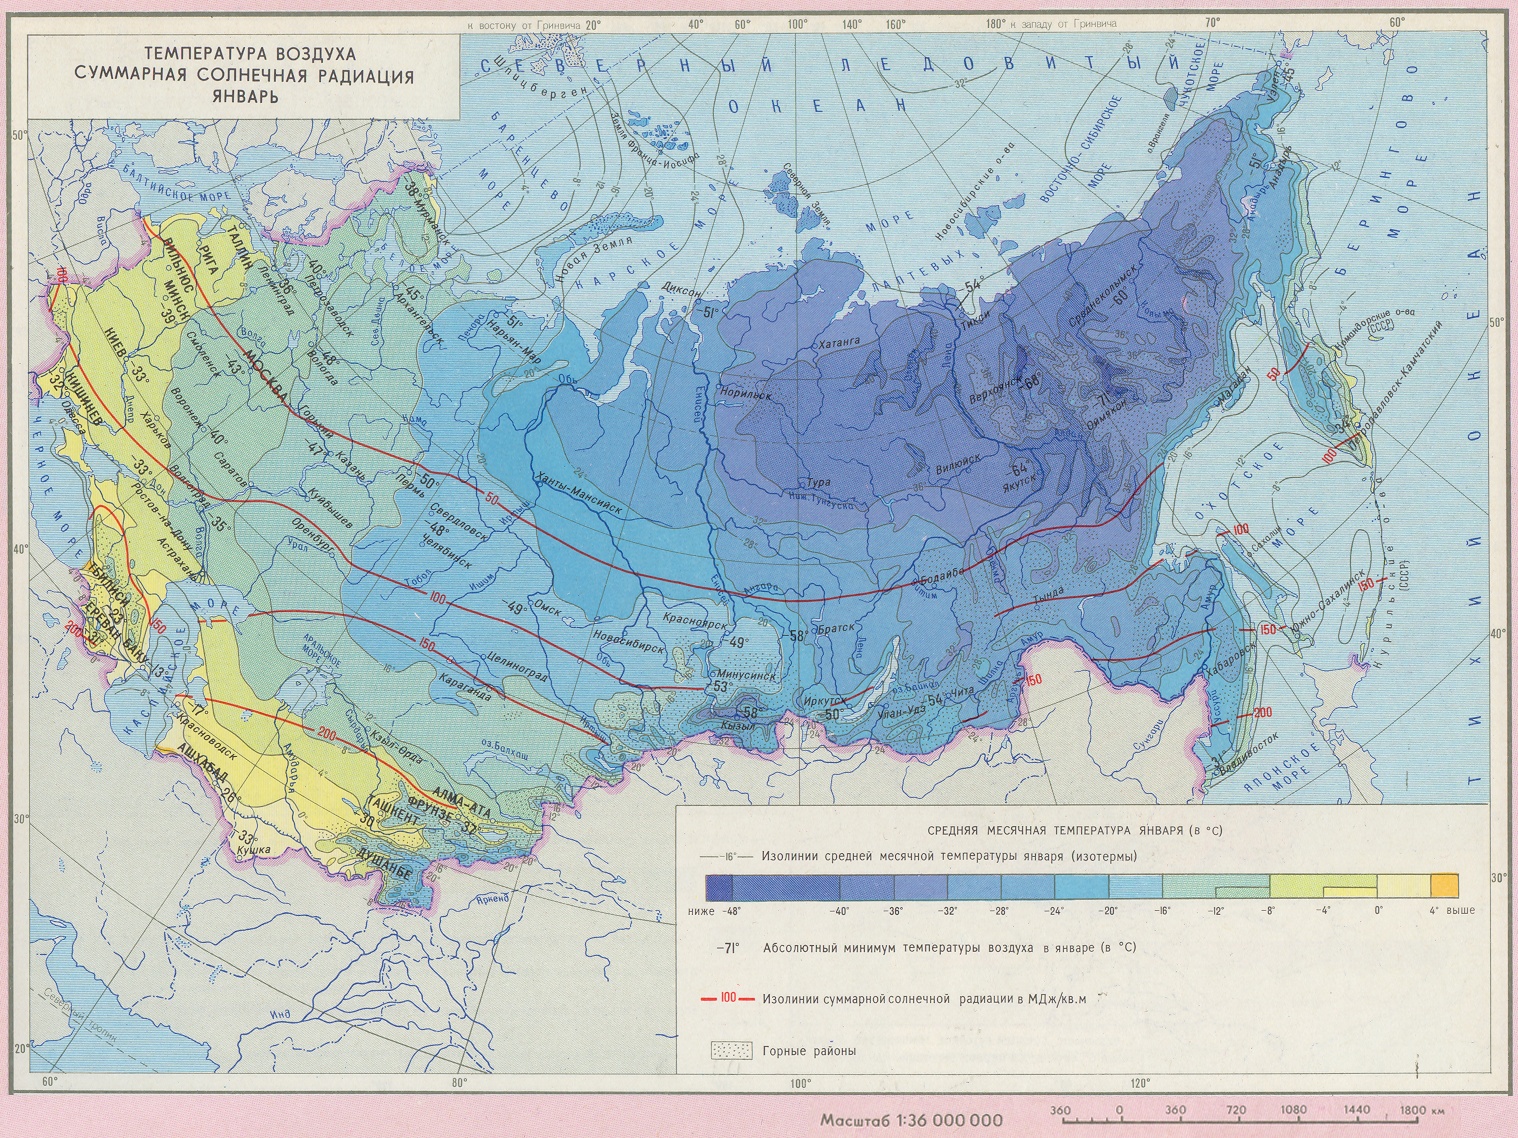 Суммарная солнечная радиация россия